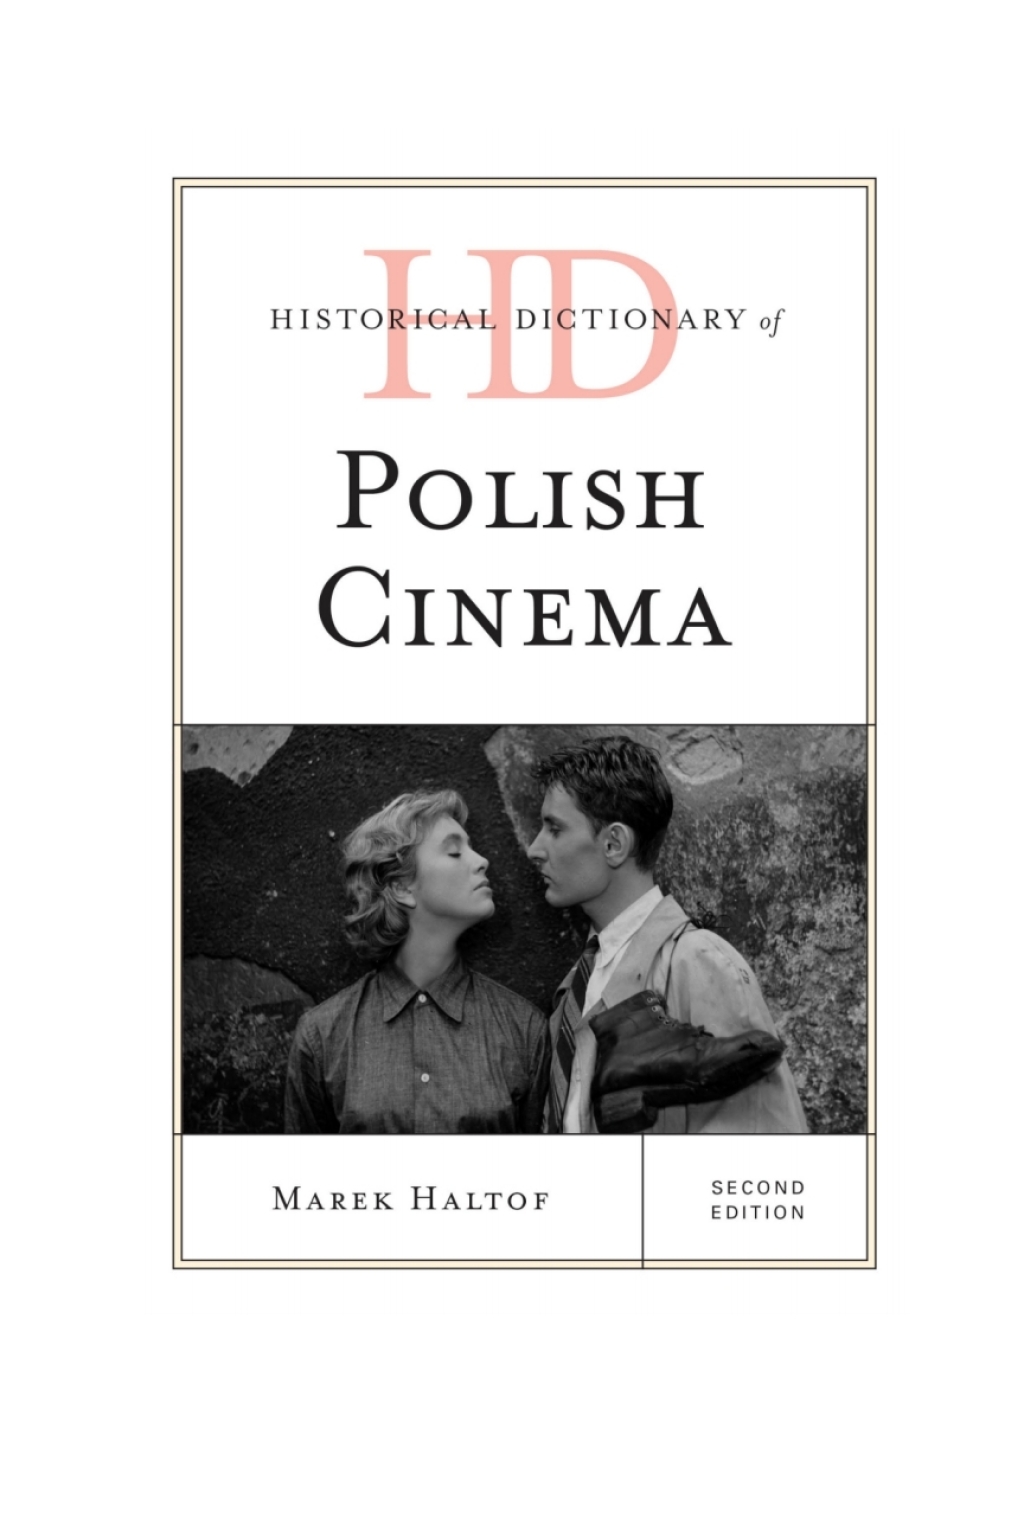 Historical Dictionary of Polish Cinema - 2nd Edition (eBook Rental)